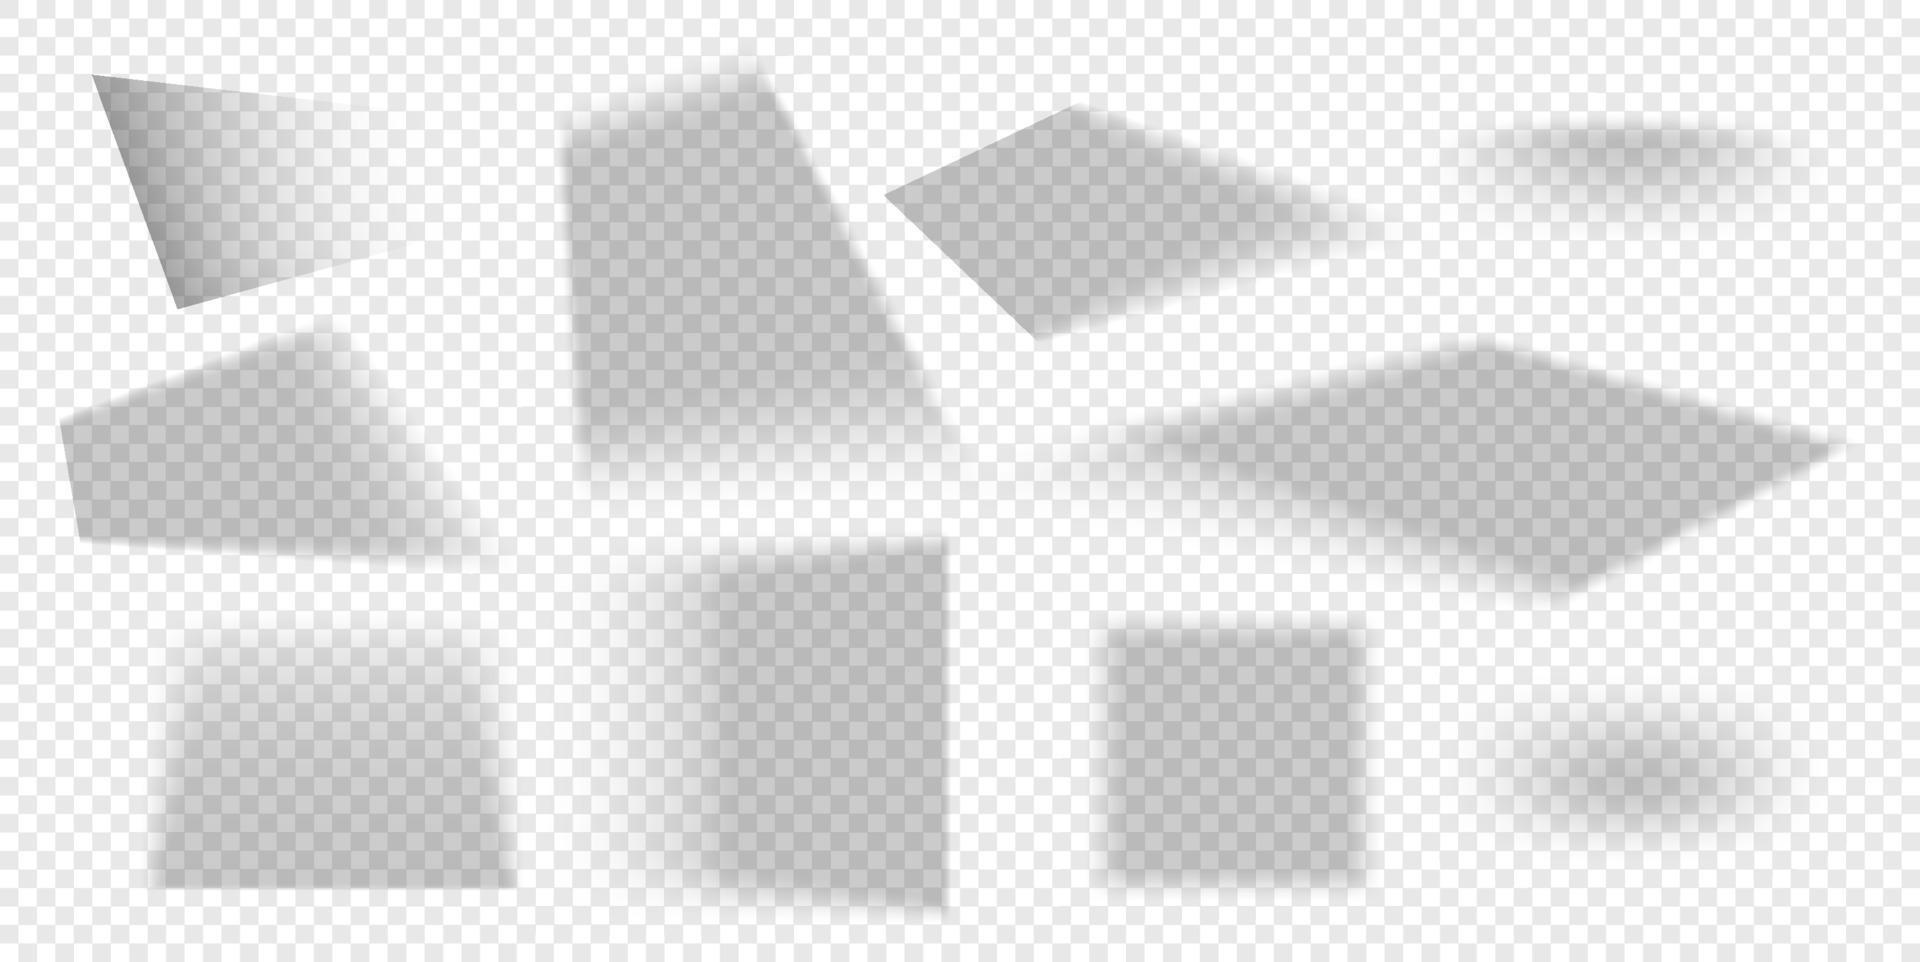 realistische schaduwen collectie op transparante achtergrond. schaduw overlay vector sjabloon